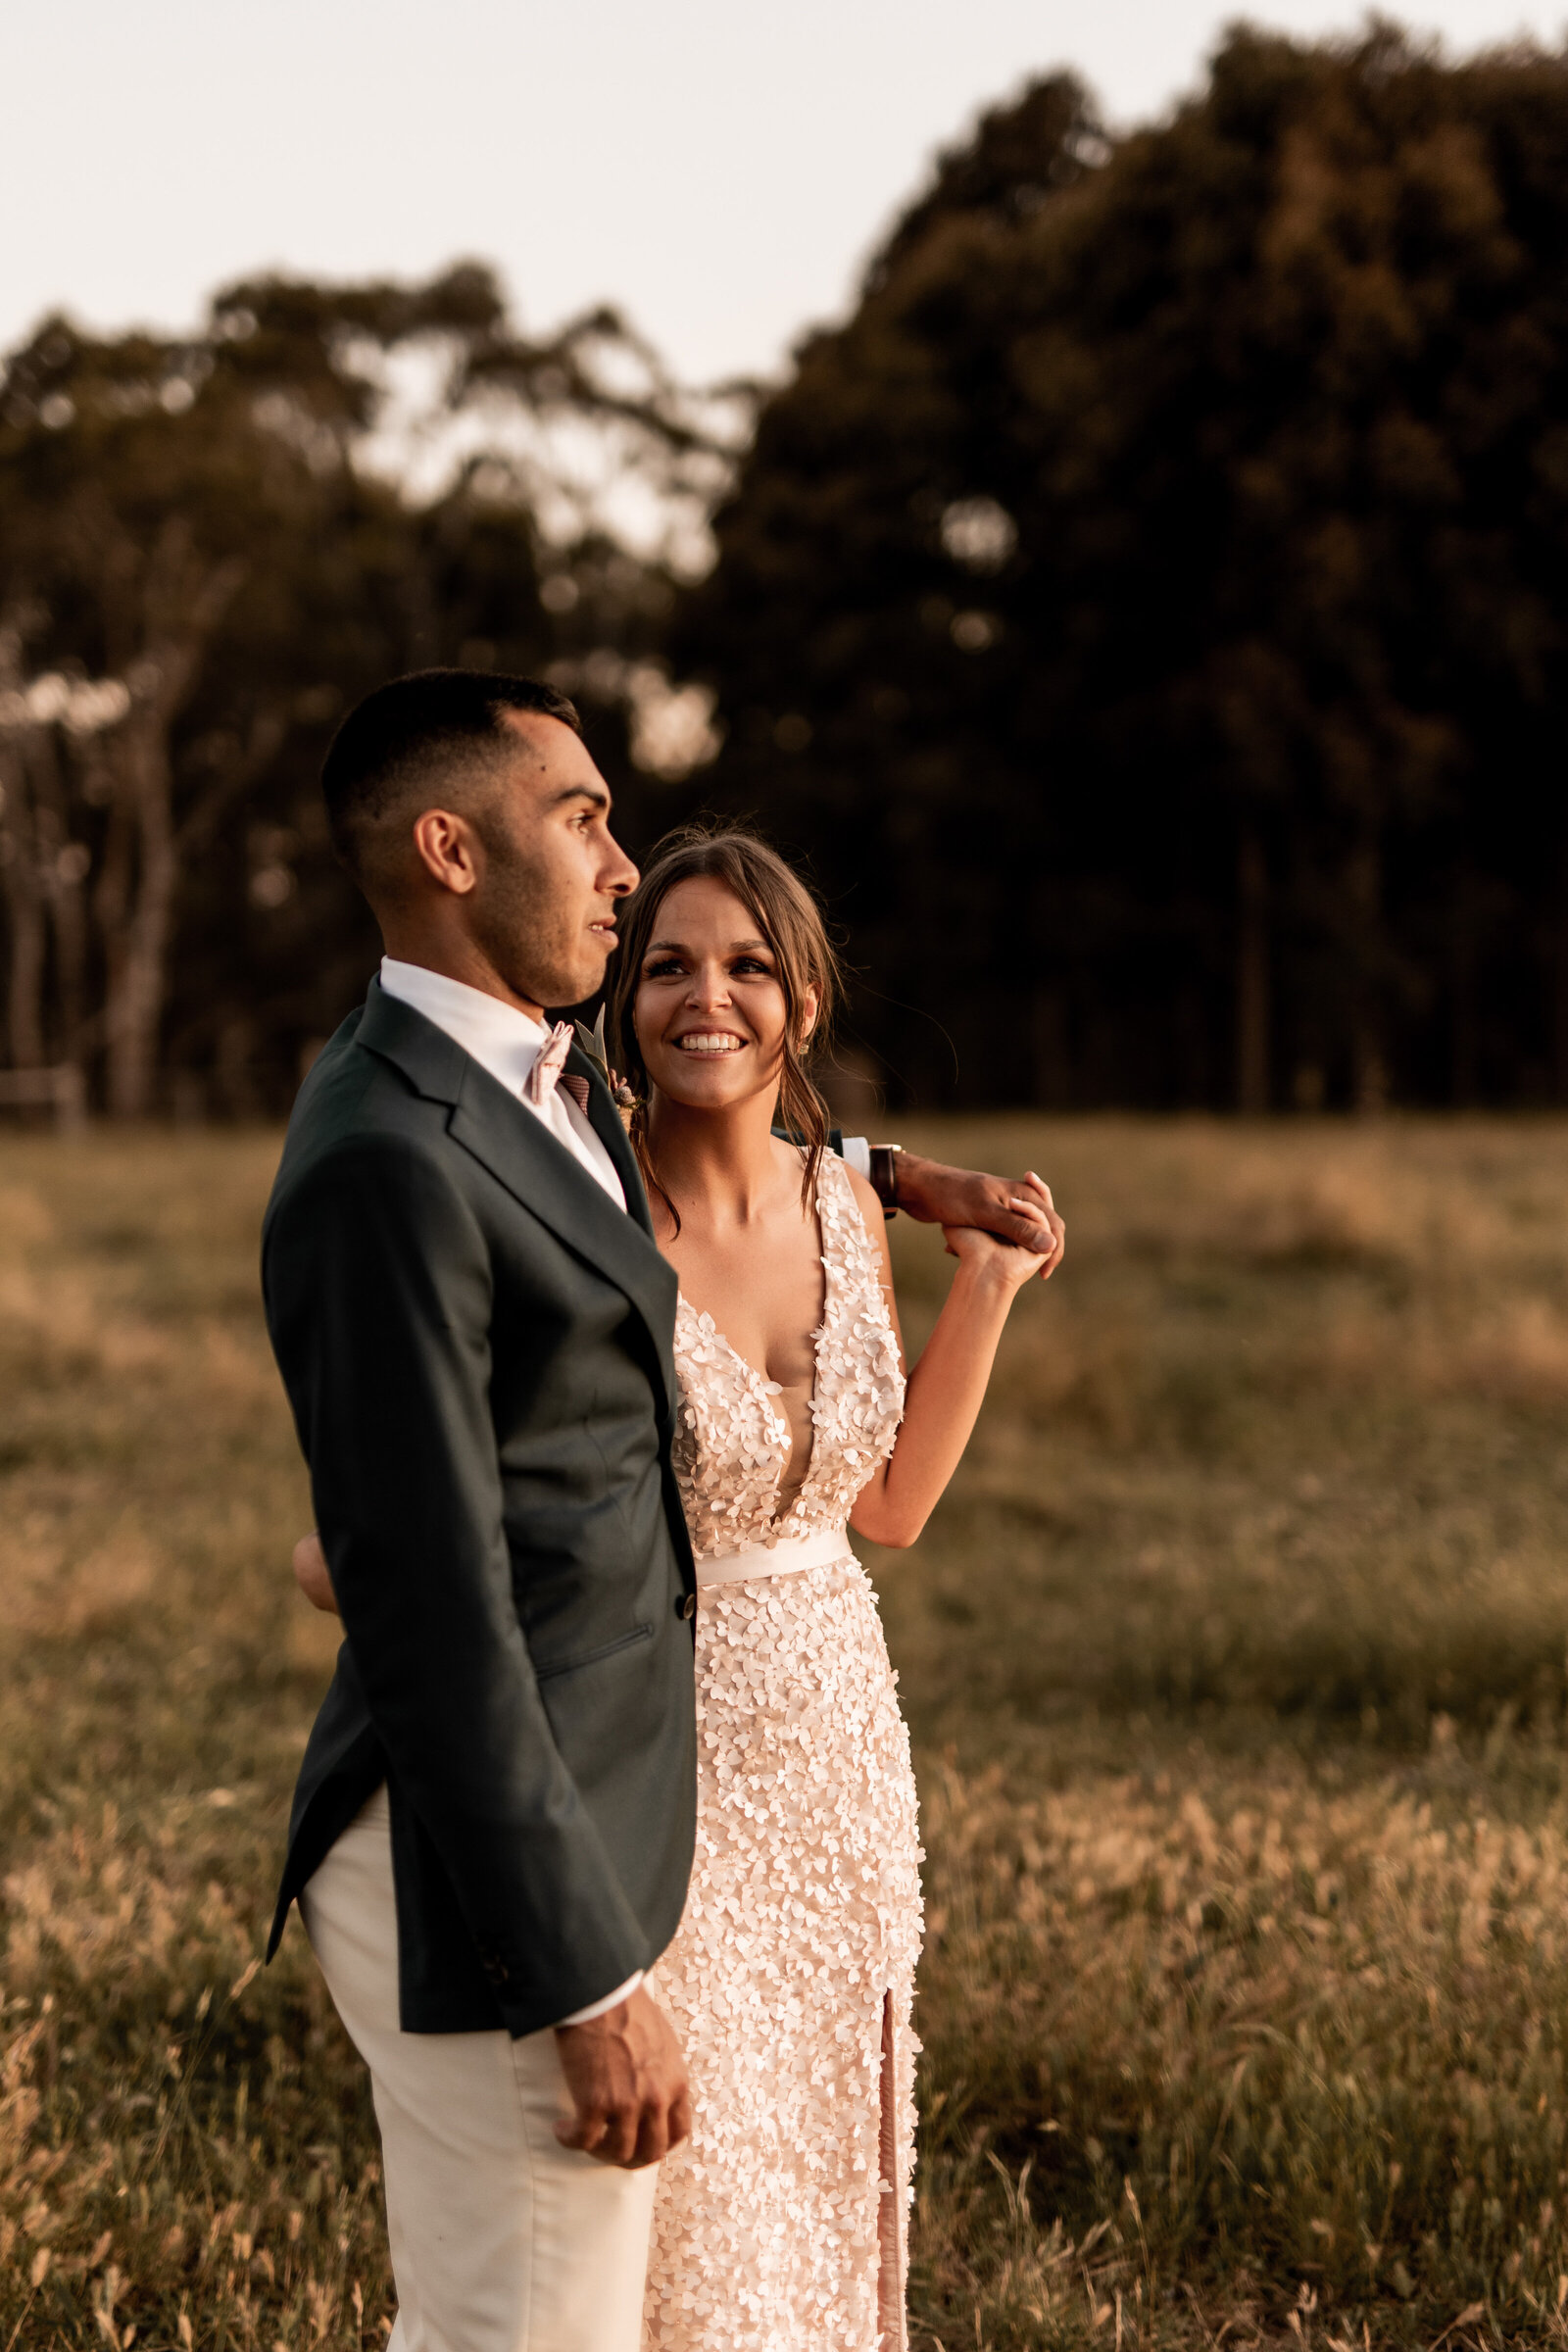 Chloe-Benny-Rexvil-Photography-Adelaide-Wedding-Photographer-467